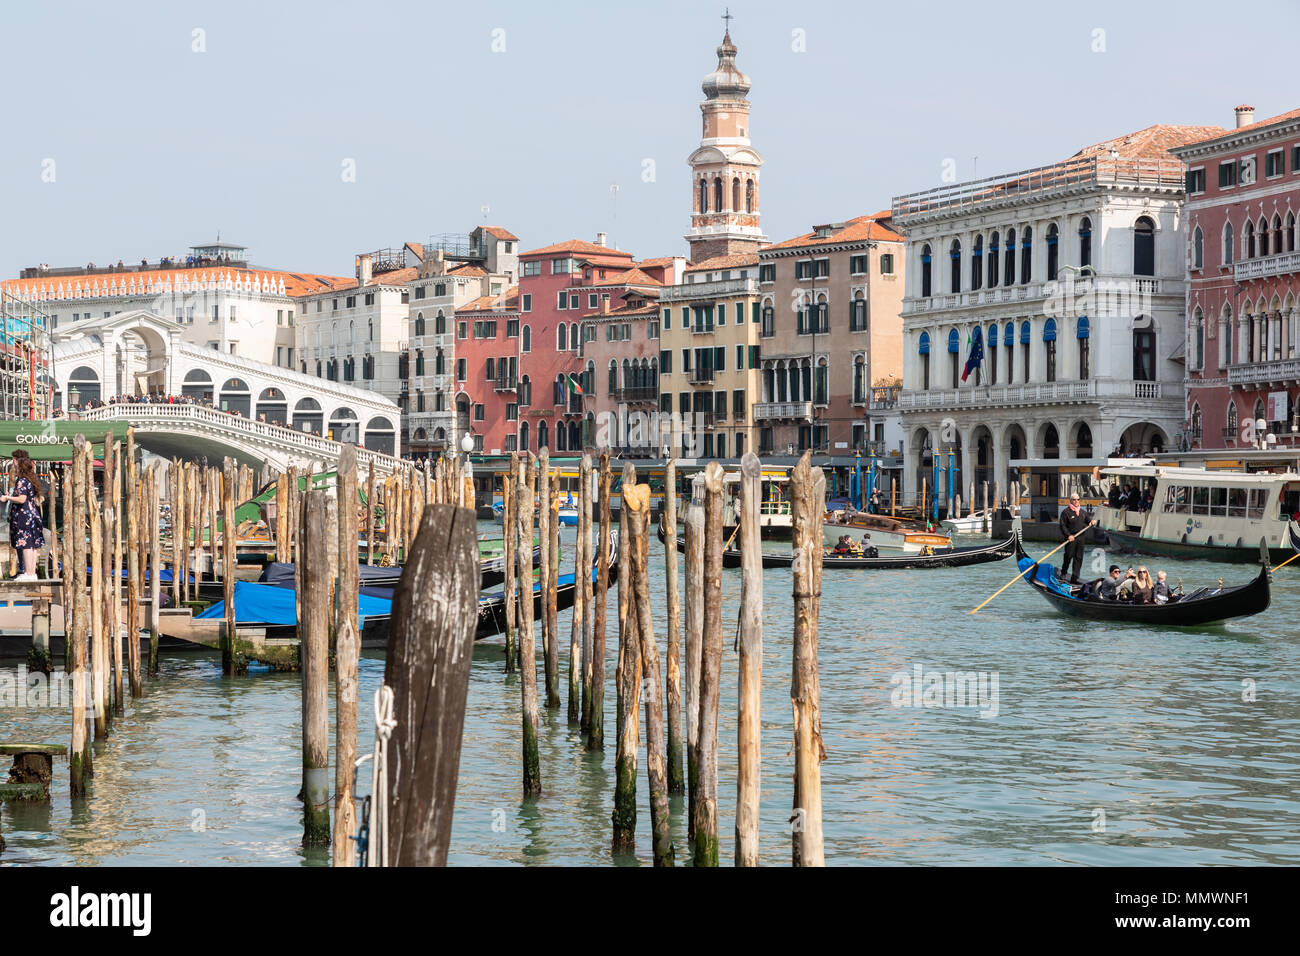 The Grand Canal, Venice, Italy Stock Photo